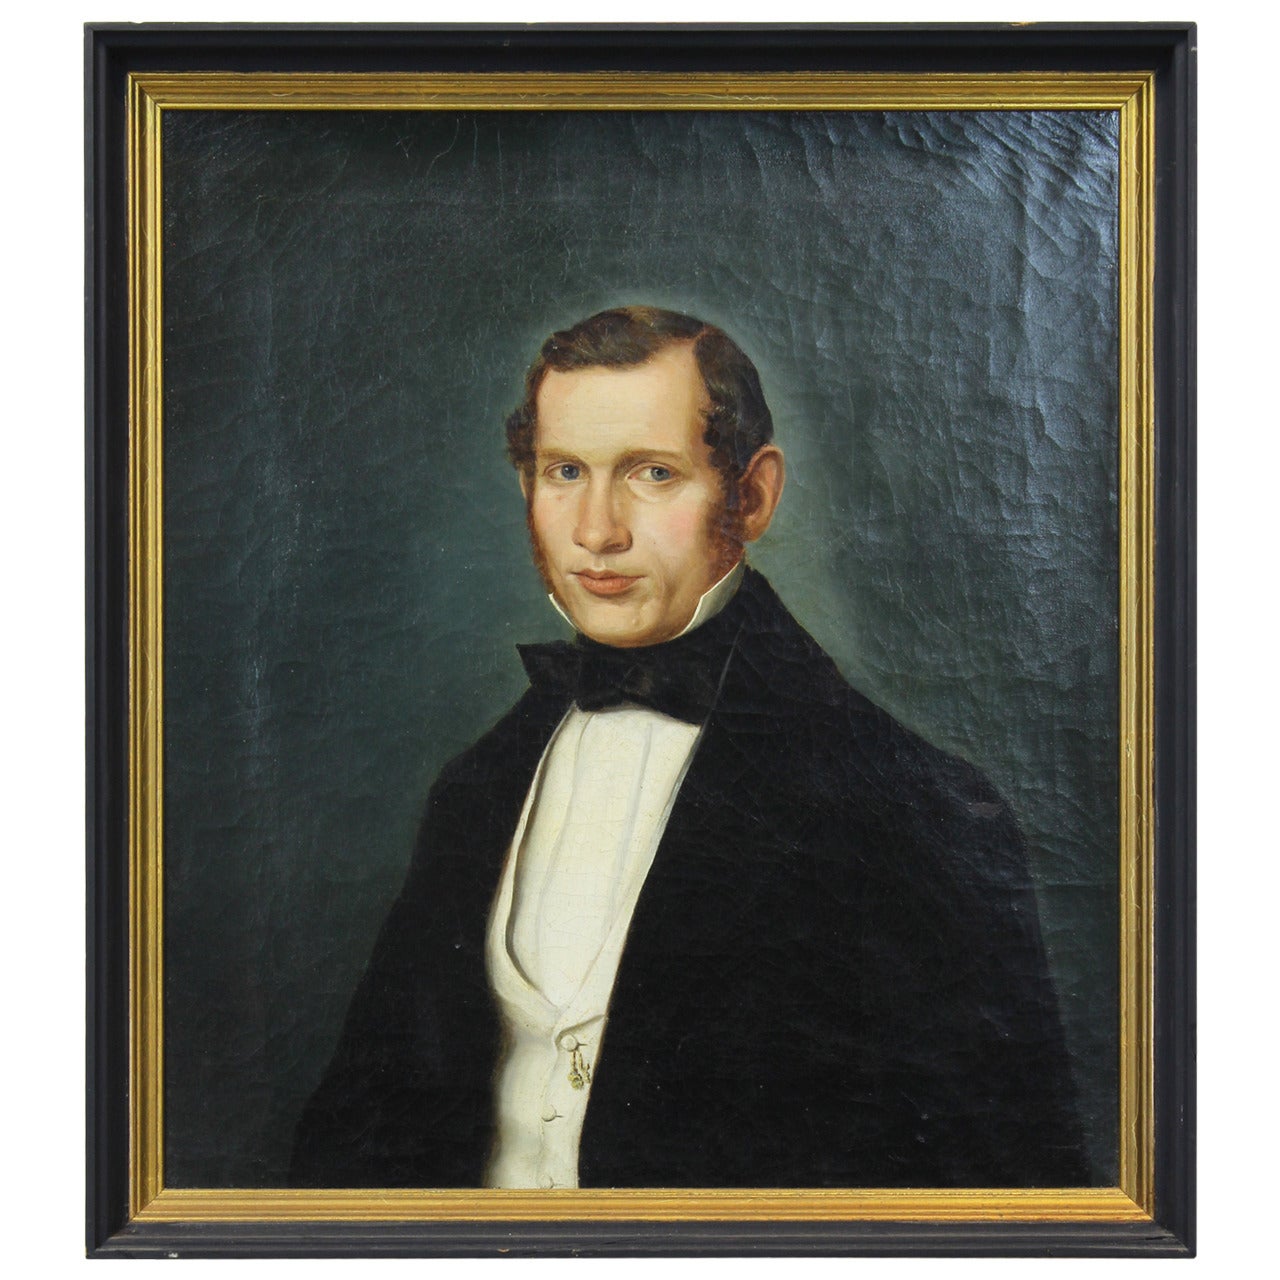 Very Fine 19th Century American Portrait of a Gentleman